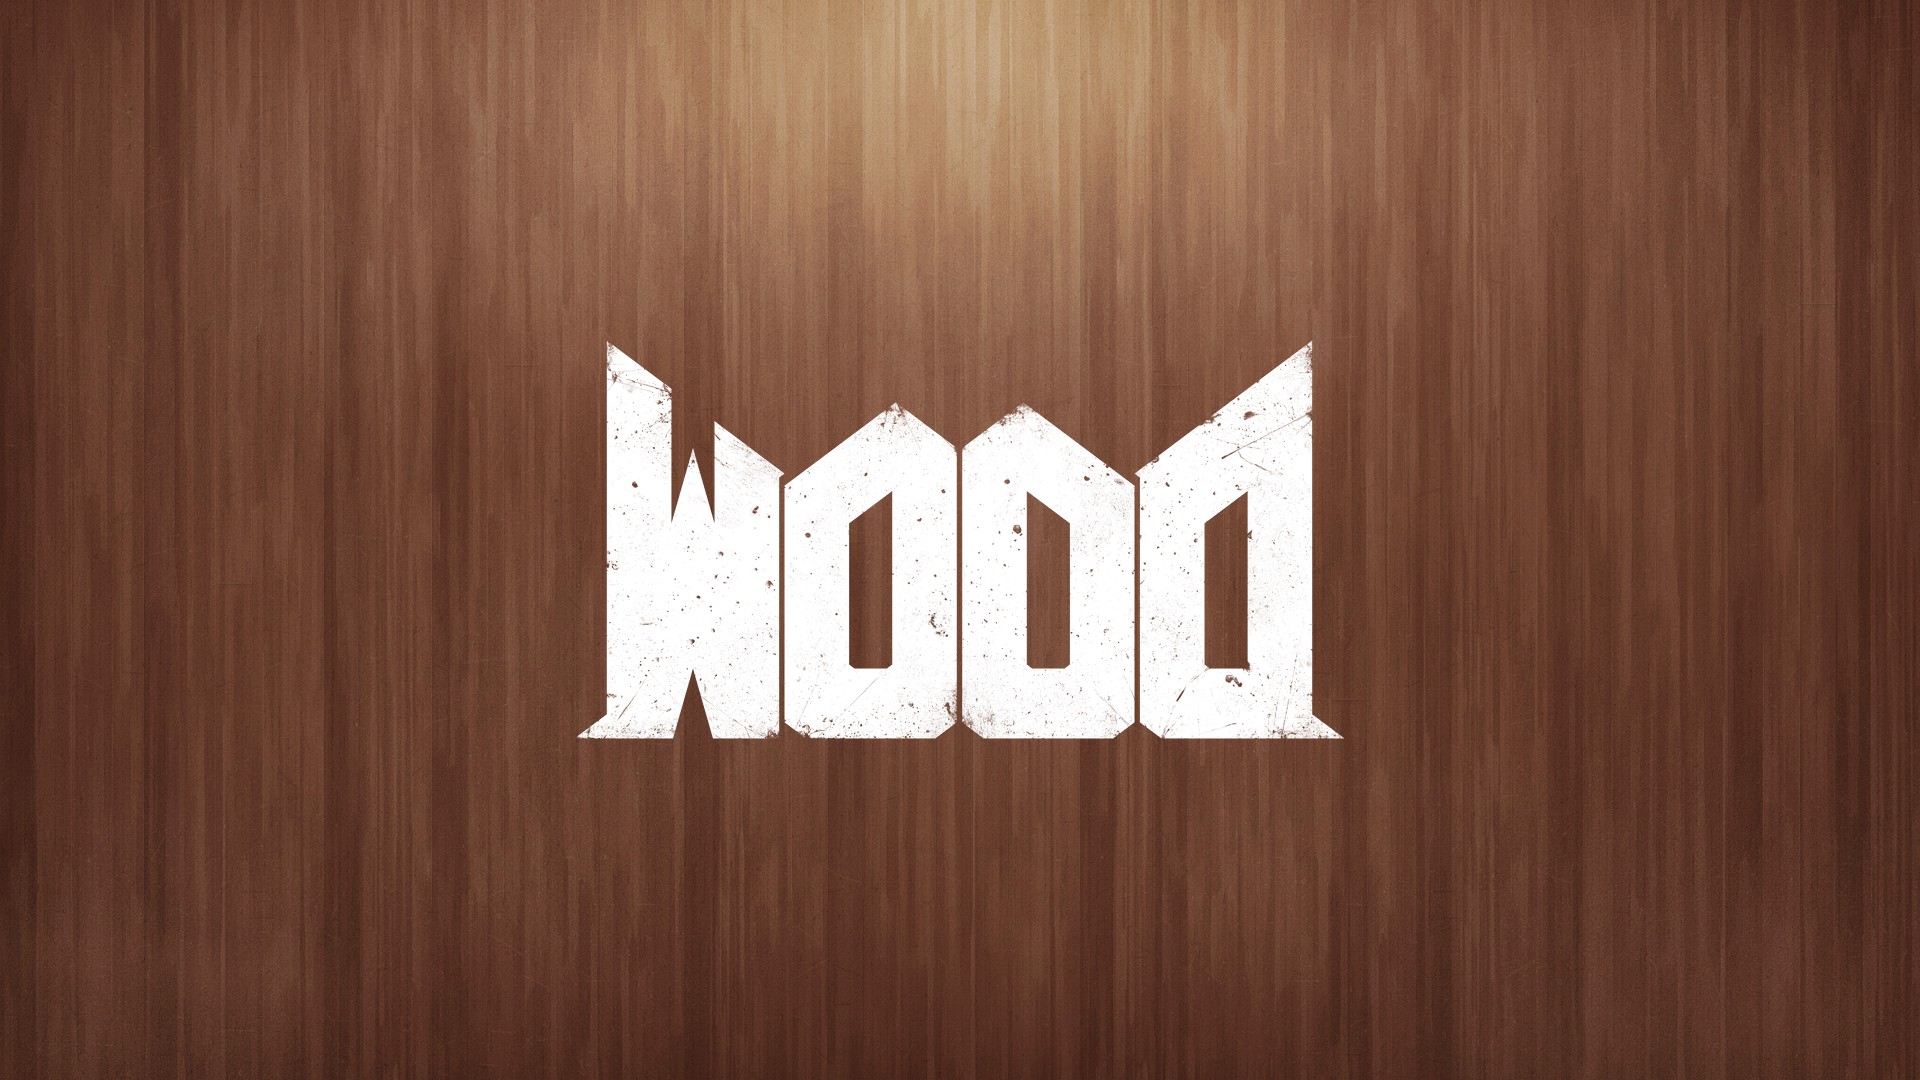 wood, Doom (game), Video Games, Humor, Upside Down, Letter, Text, Wooden Surface, Digital Art, Minimalism, Simple Wallpaper